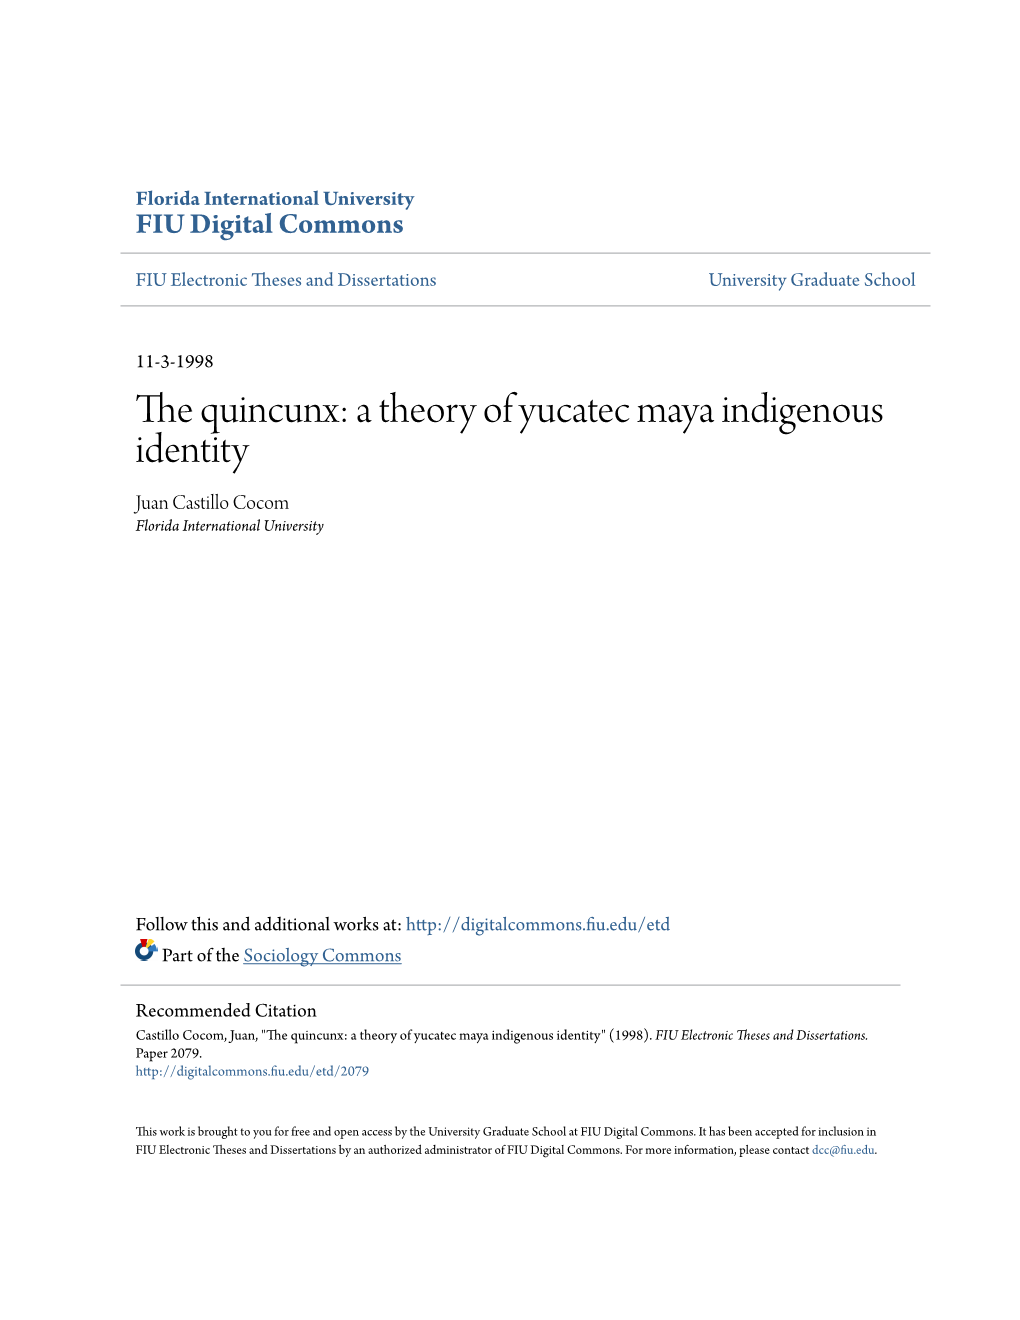 The Quincunx: a Theory of Yucatec Maya Indigenous Identity Juan Castillo Cocom Florida International University